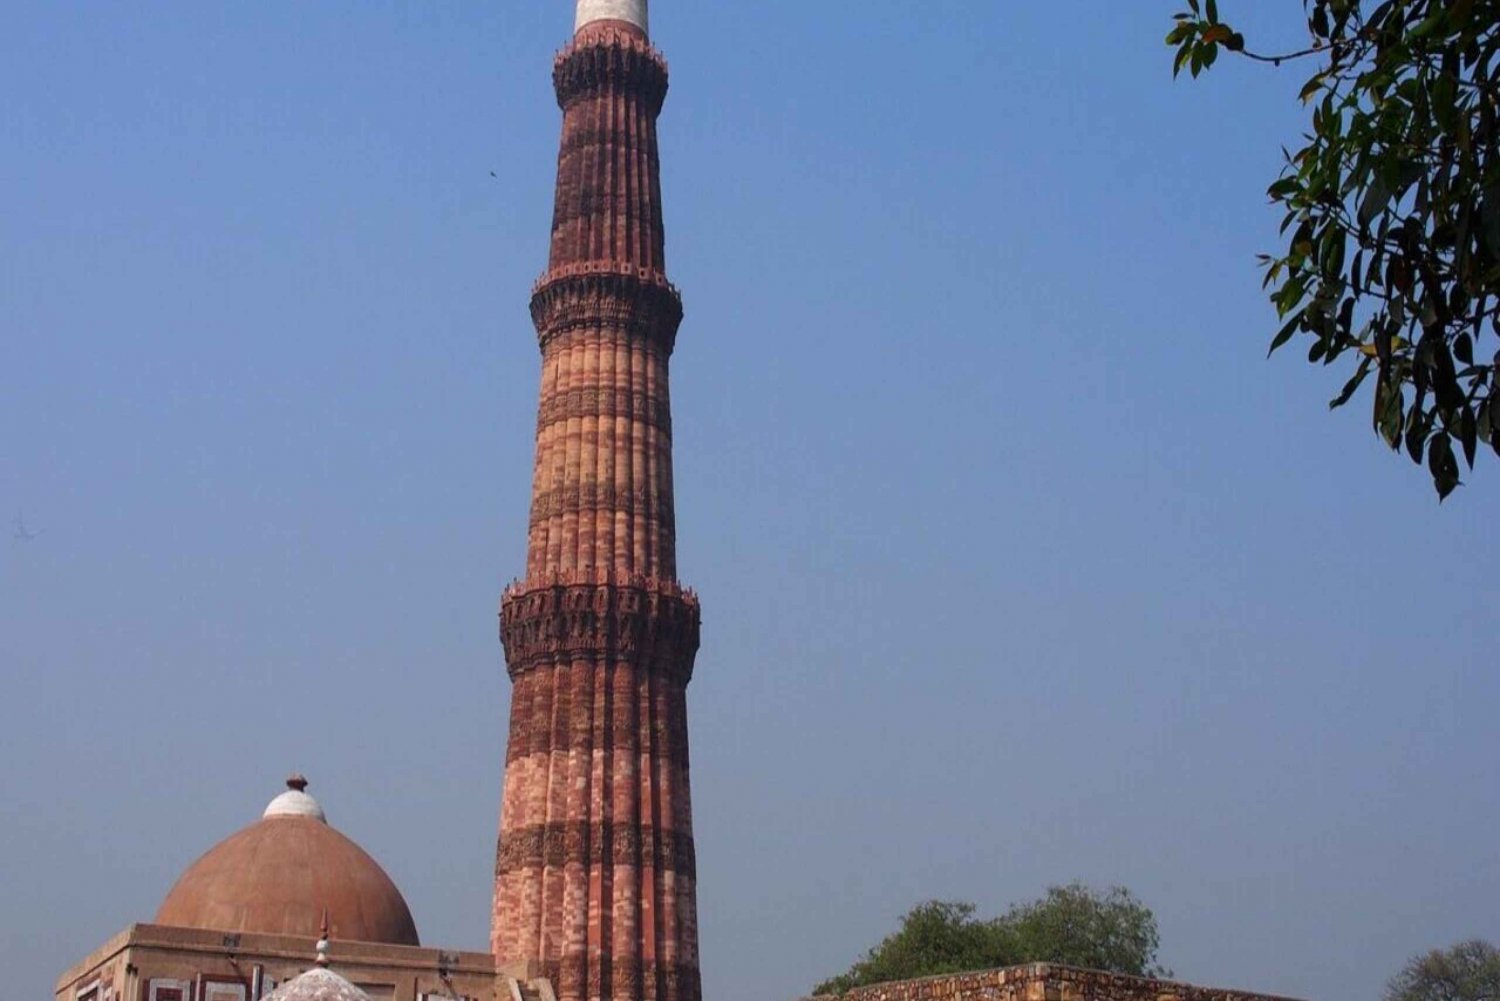 New Delhi: Qutub Minar Skip-the-Line Entry Ticket